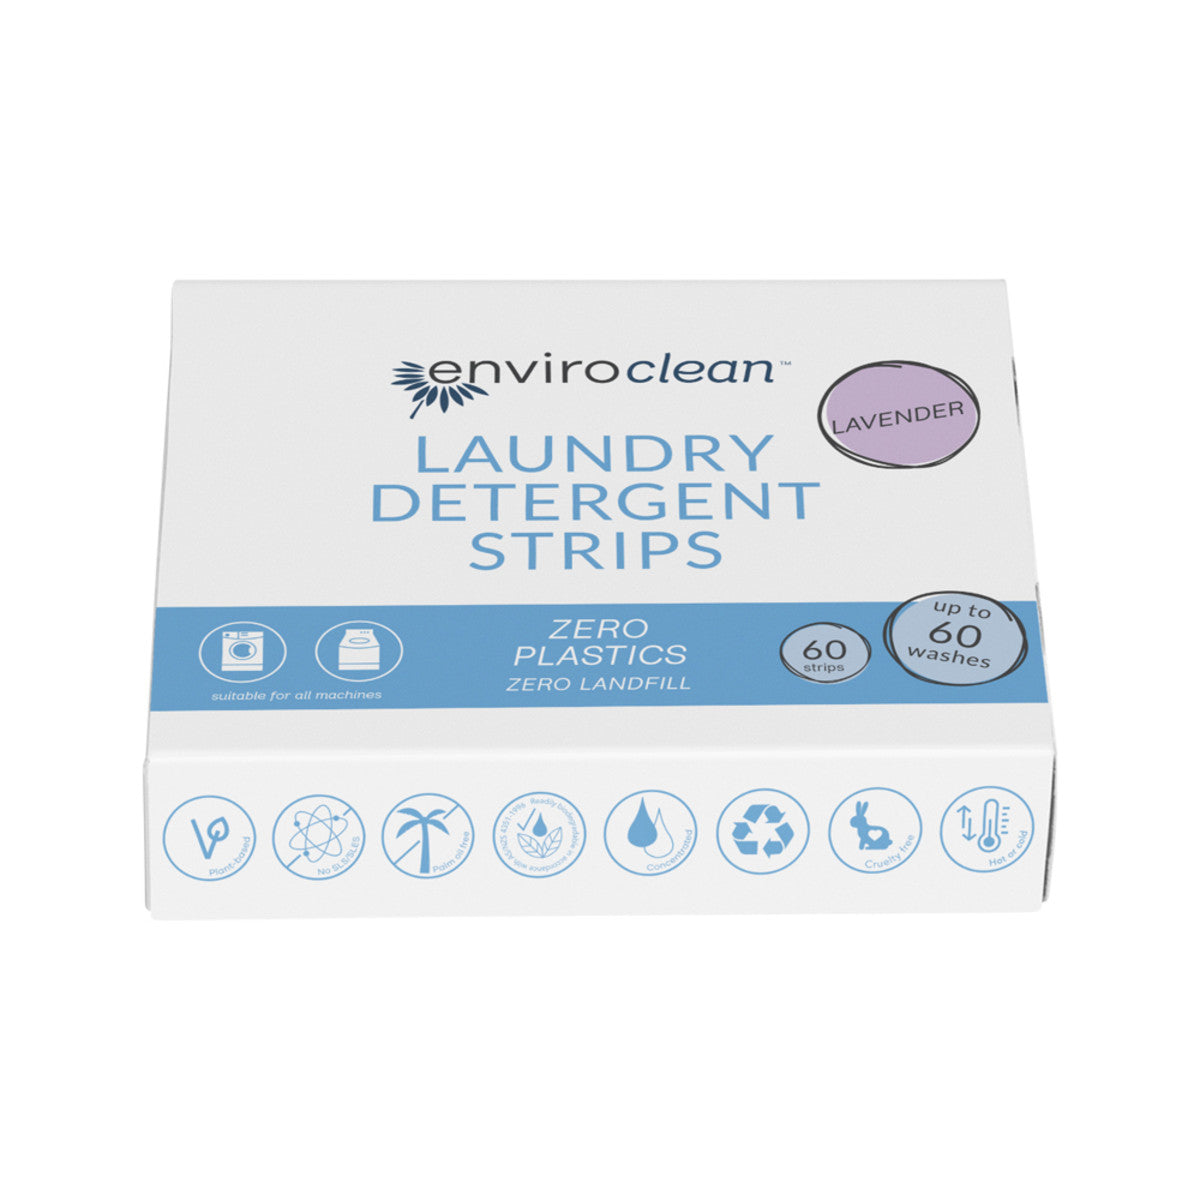 EnviroClean - Laundry Detergent Strips Lavender x 60 Pack